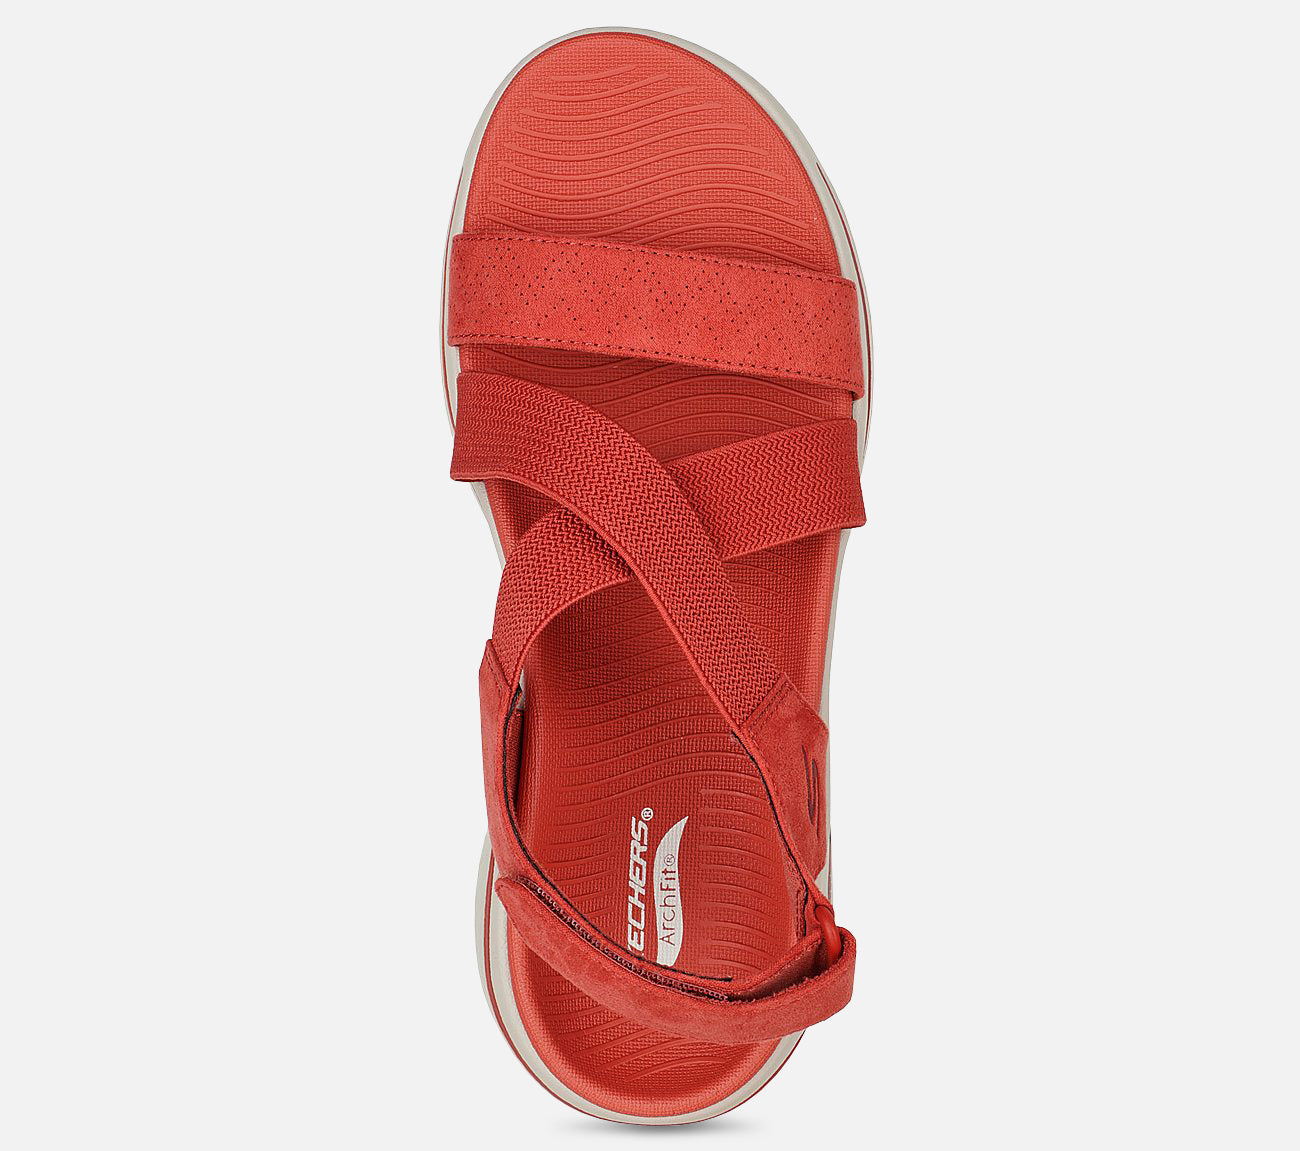 GO WALK Arch Fit - Treasured Sandal Sandal Skechers